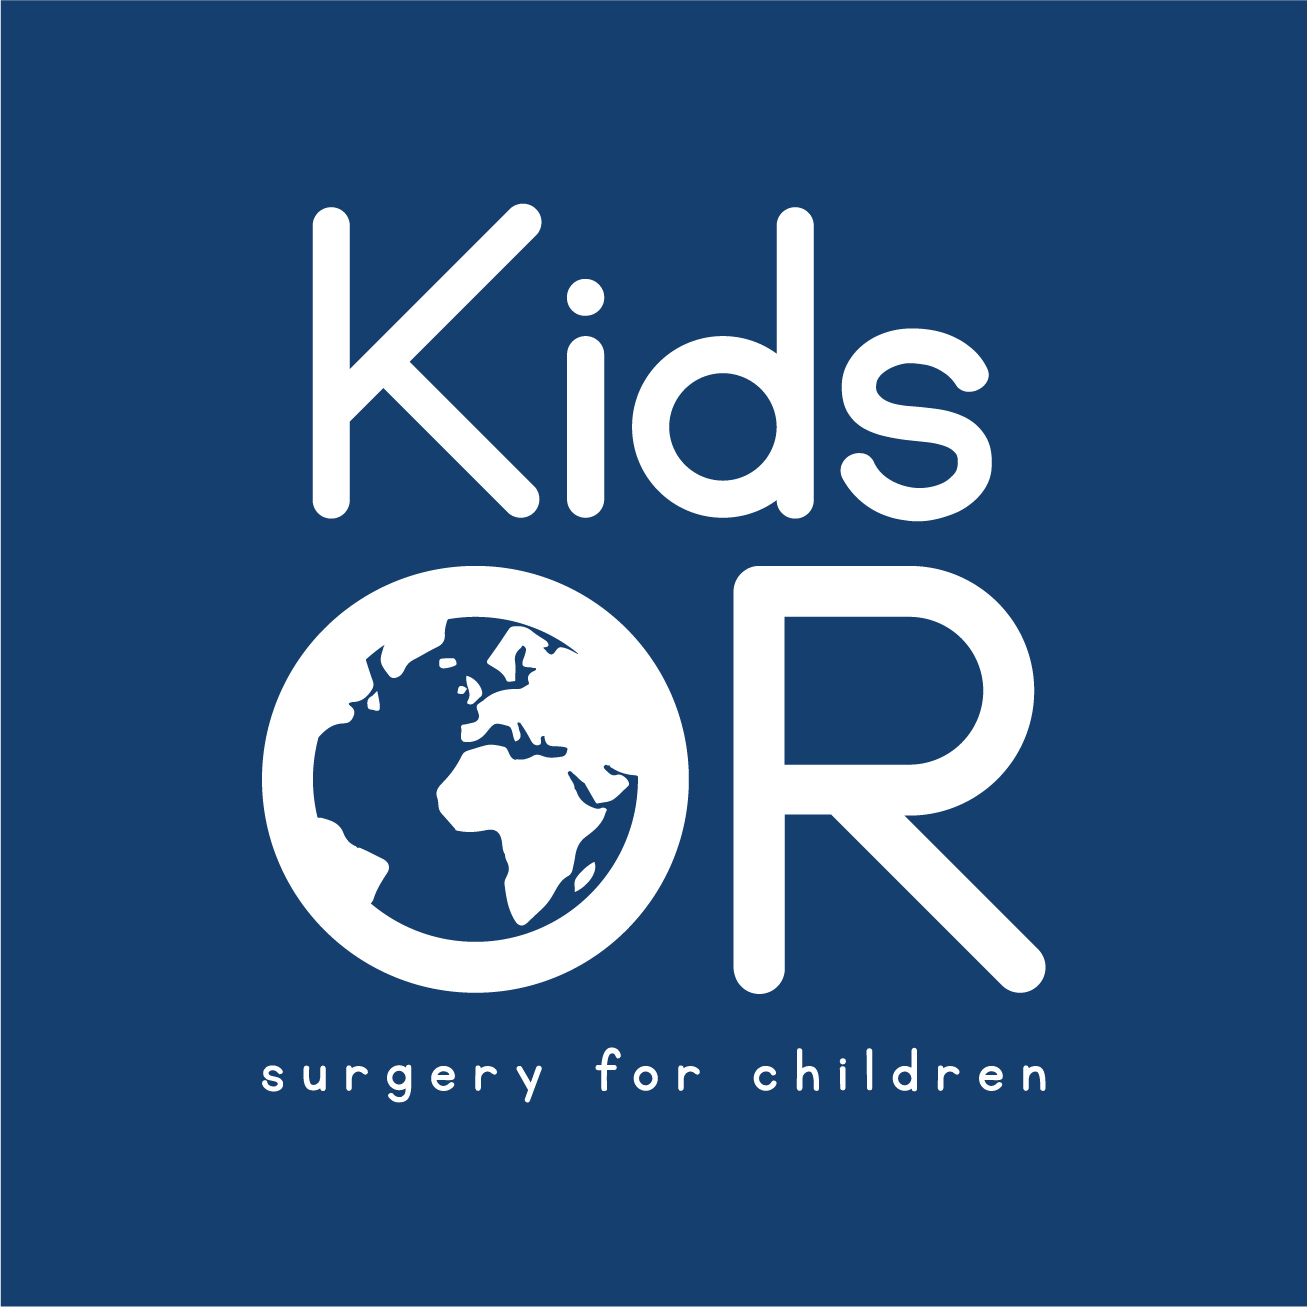 Make a regular donation to Kids Operation Room